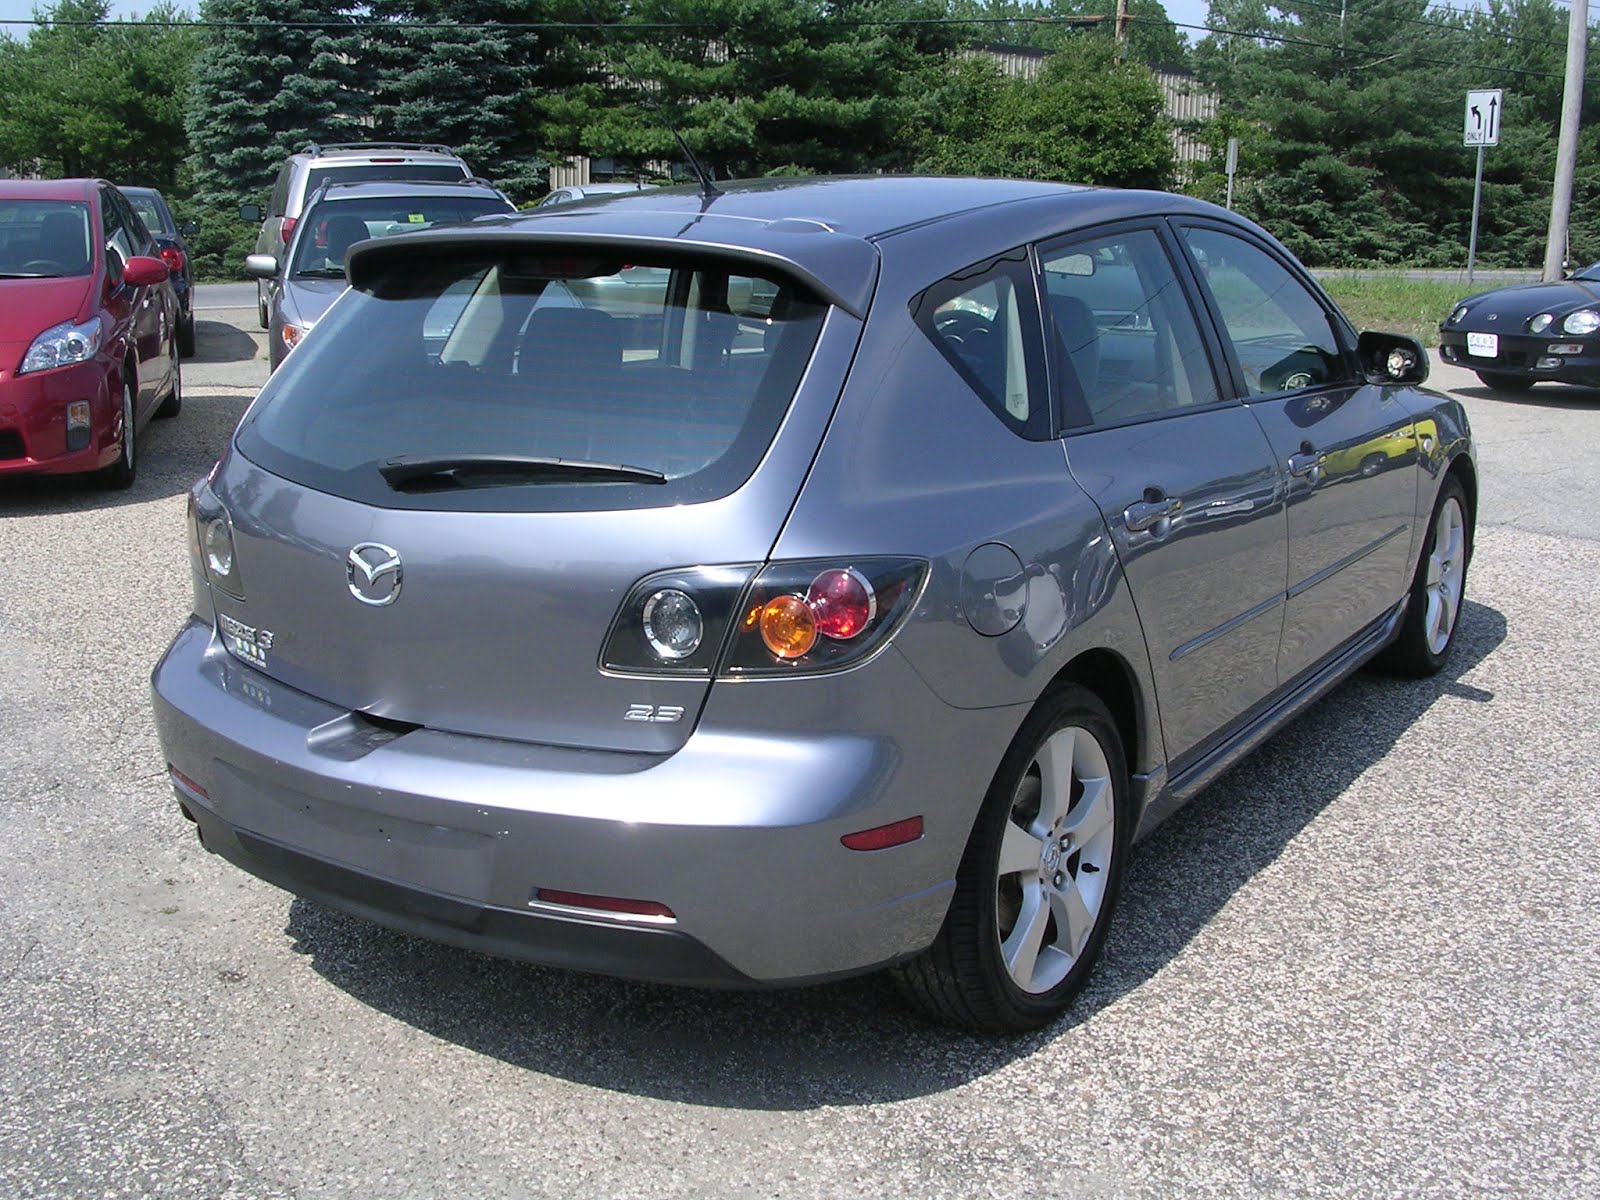 Earthy Cars Blog: EARTHY CAR OF THE WEEK: 2005 Mazda Mazda3